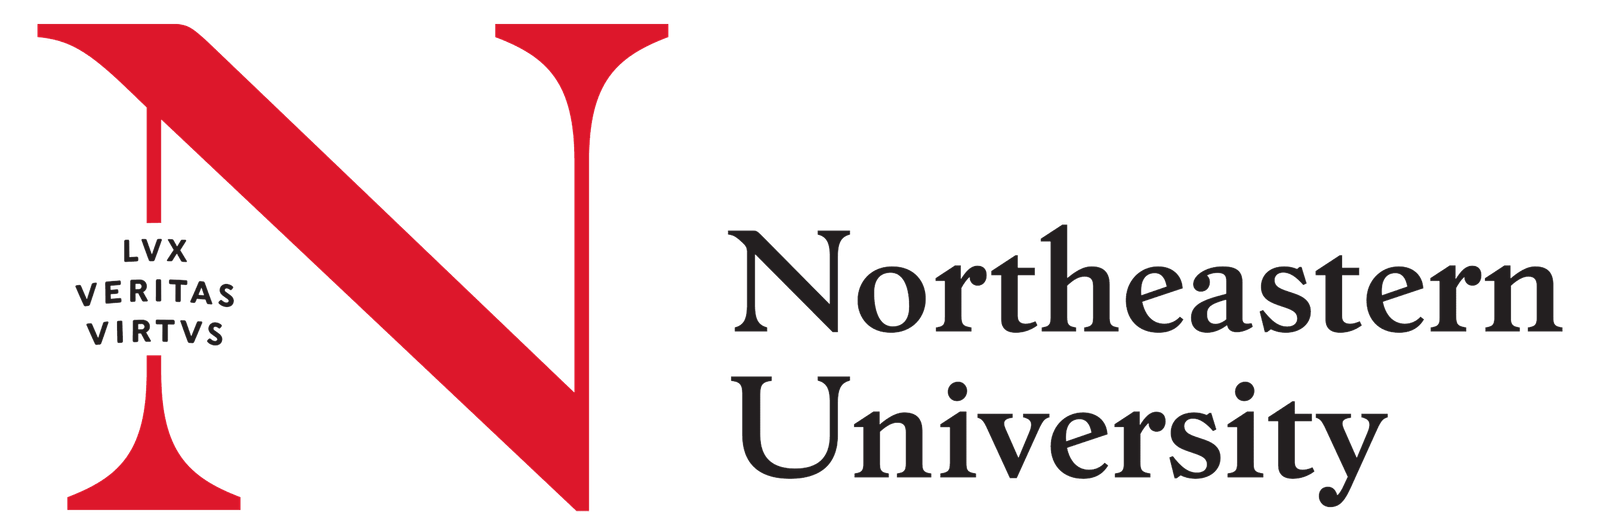 Northeastern-University-Logo